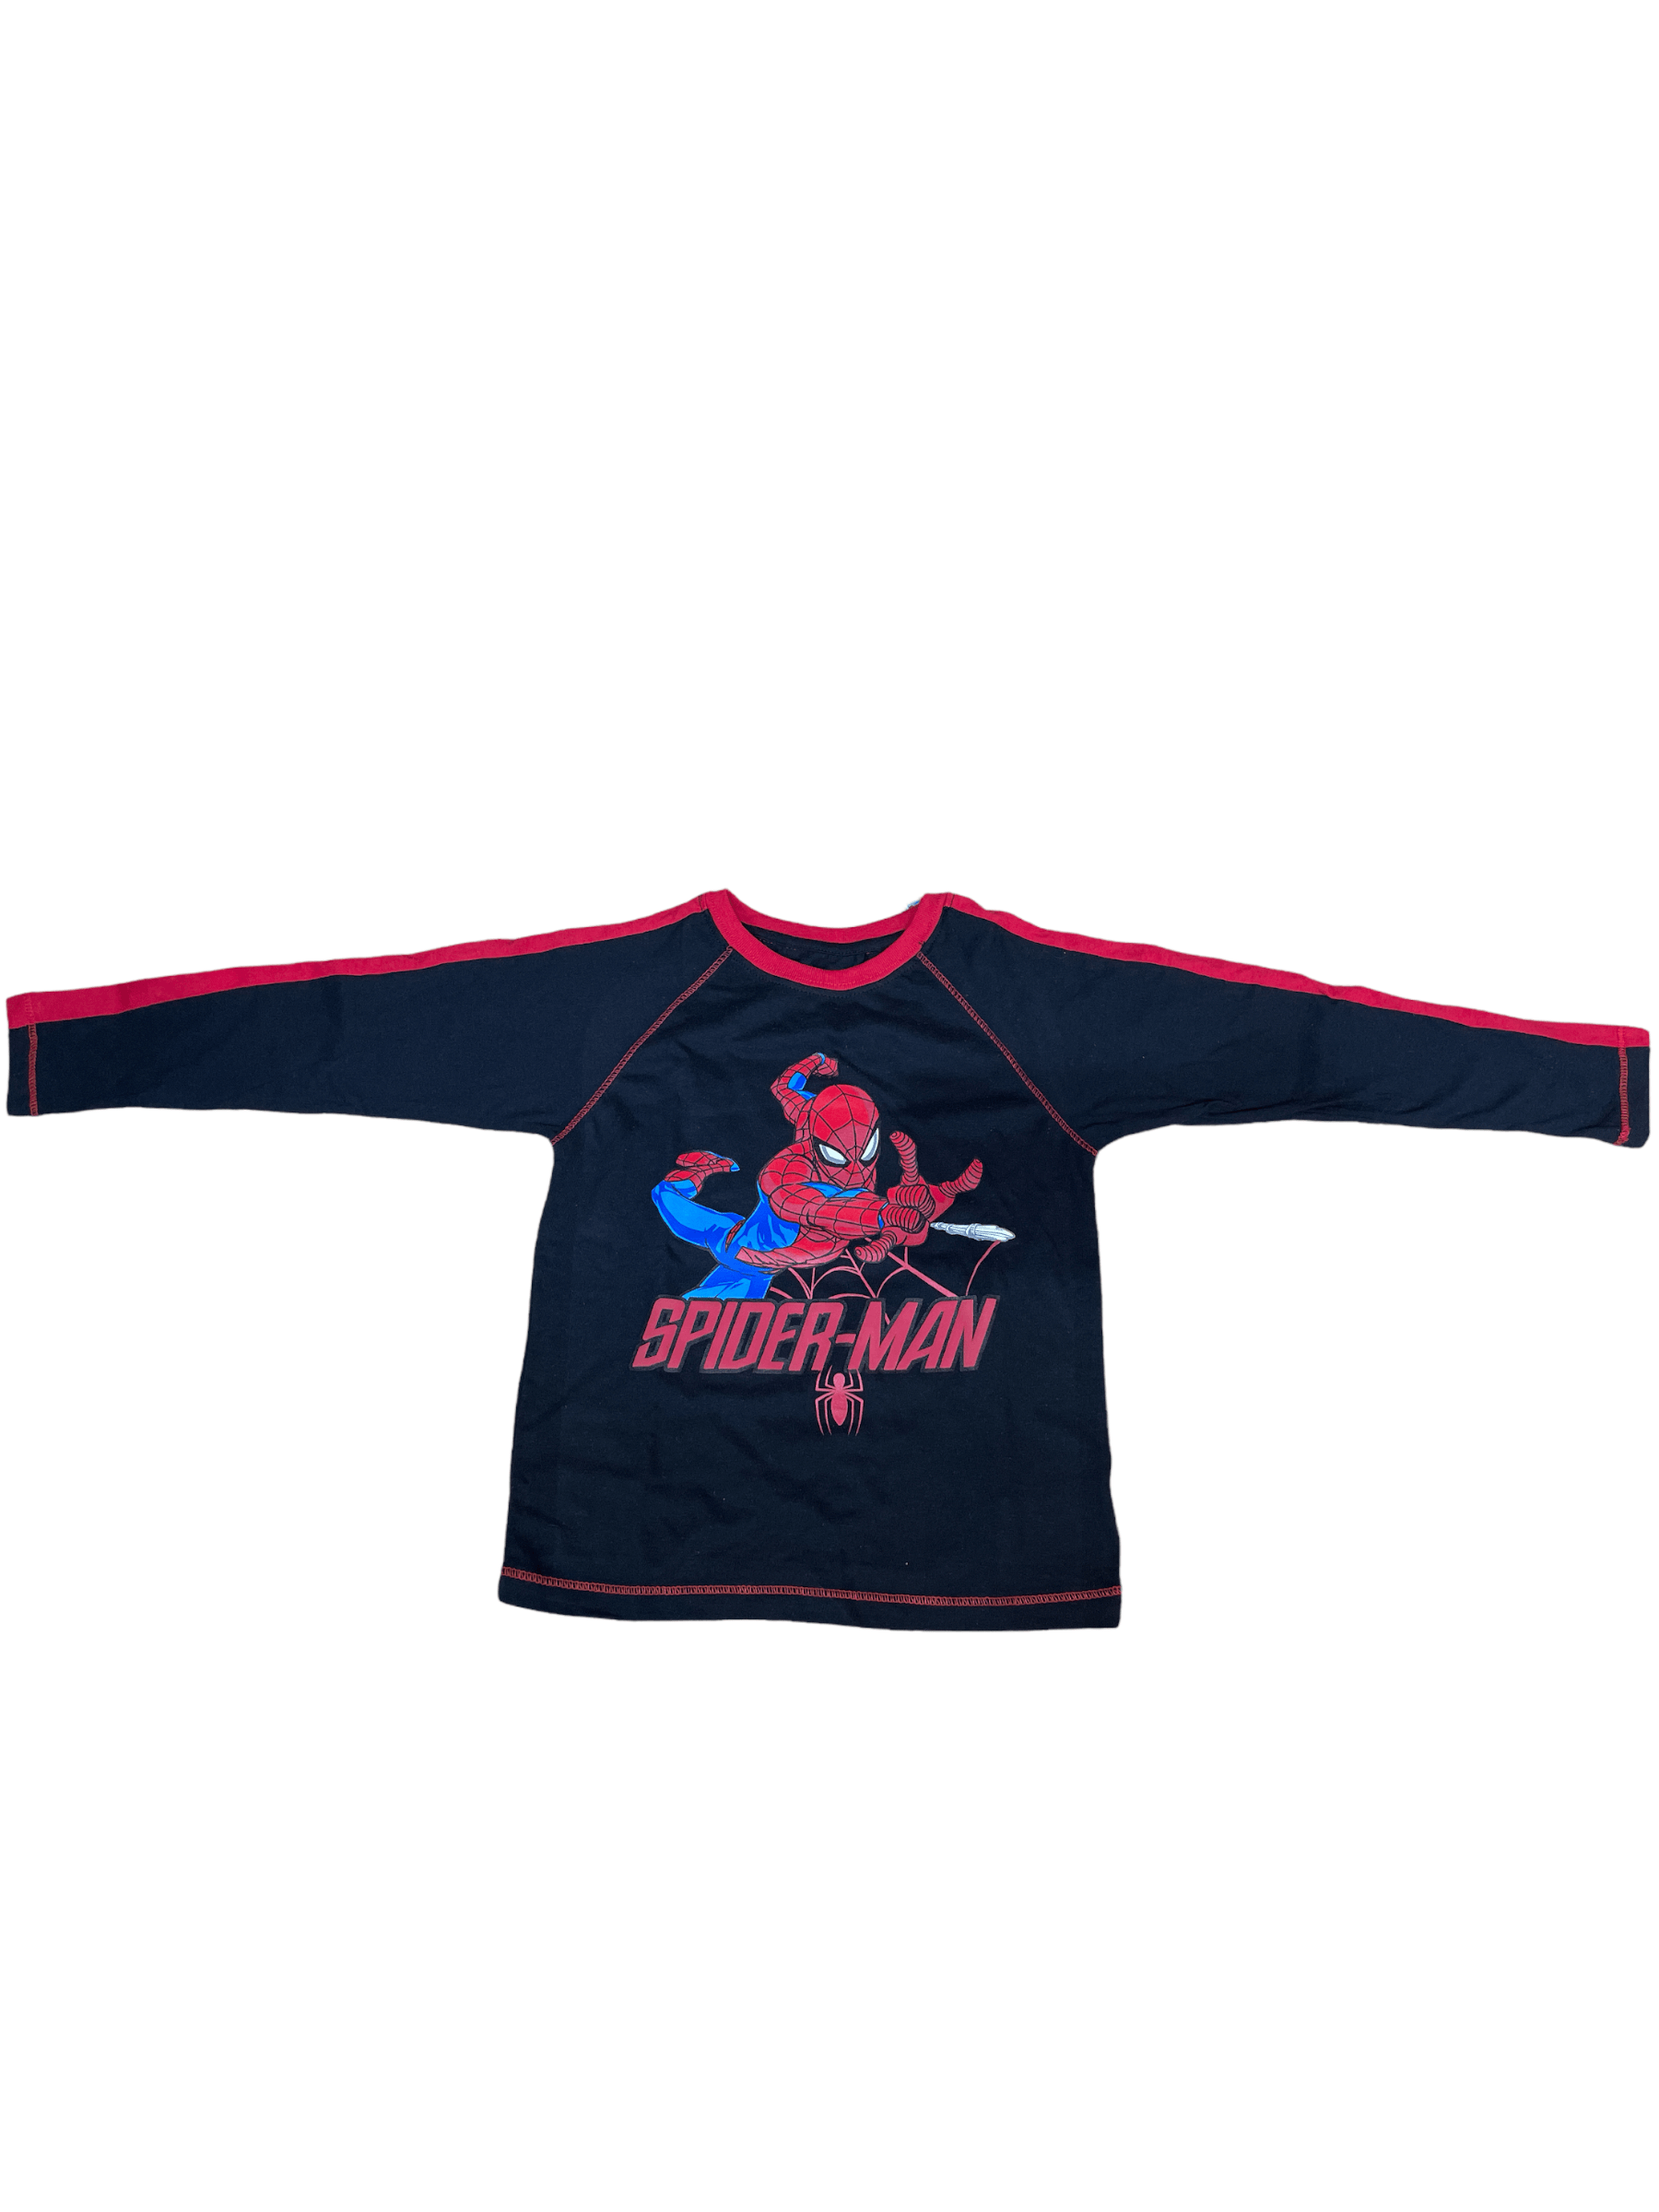 Toddler Long Sleeve Shirt Spiderman Black